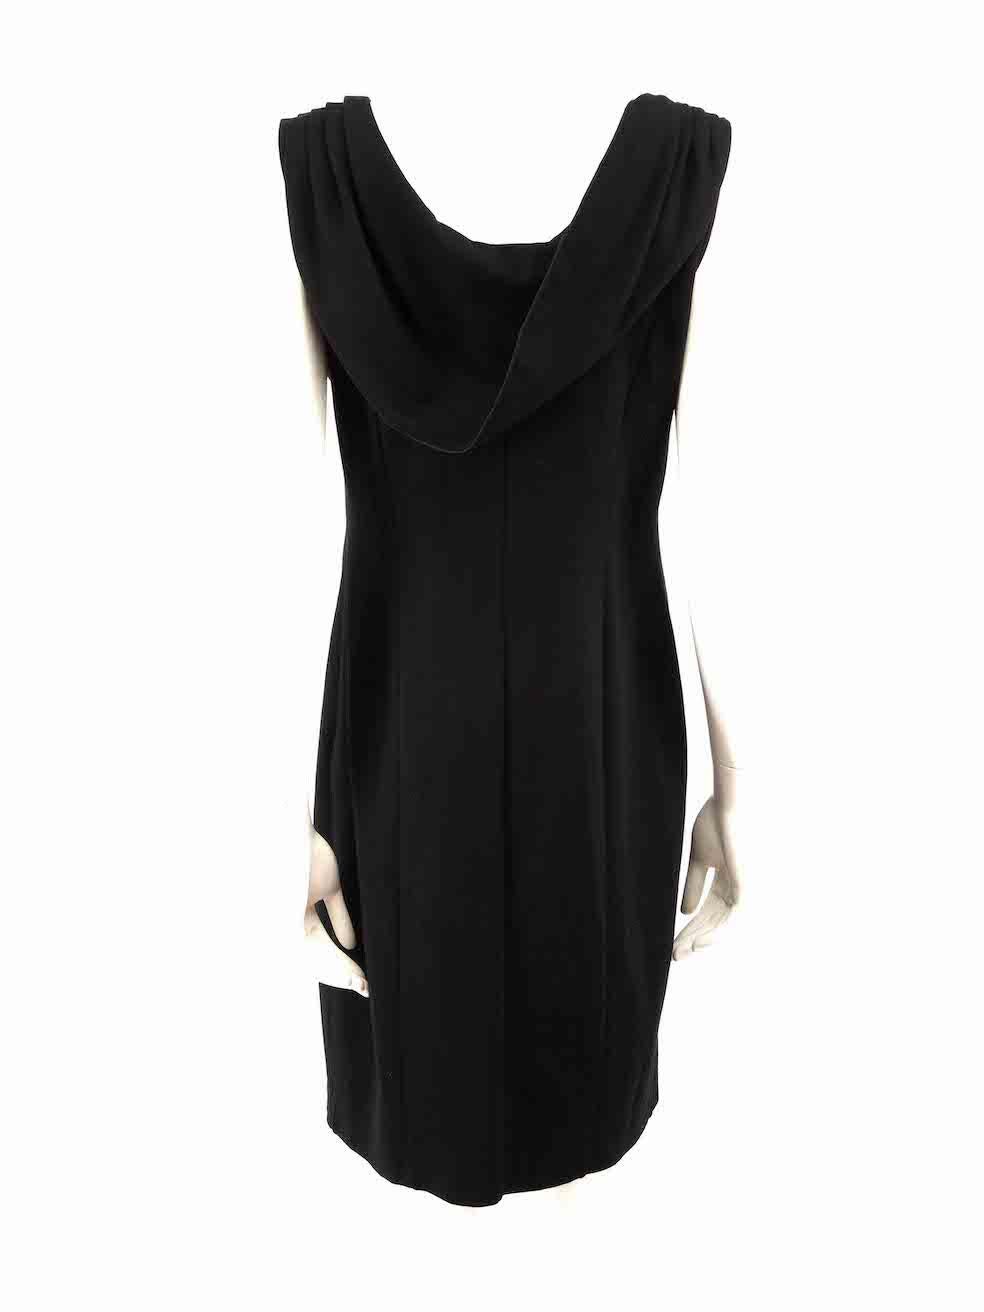 Giorgio Armani Black Draped Knee Length Dress Size XXL In Good Condition For Sale In London, GB